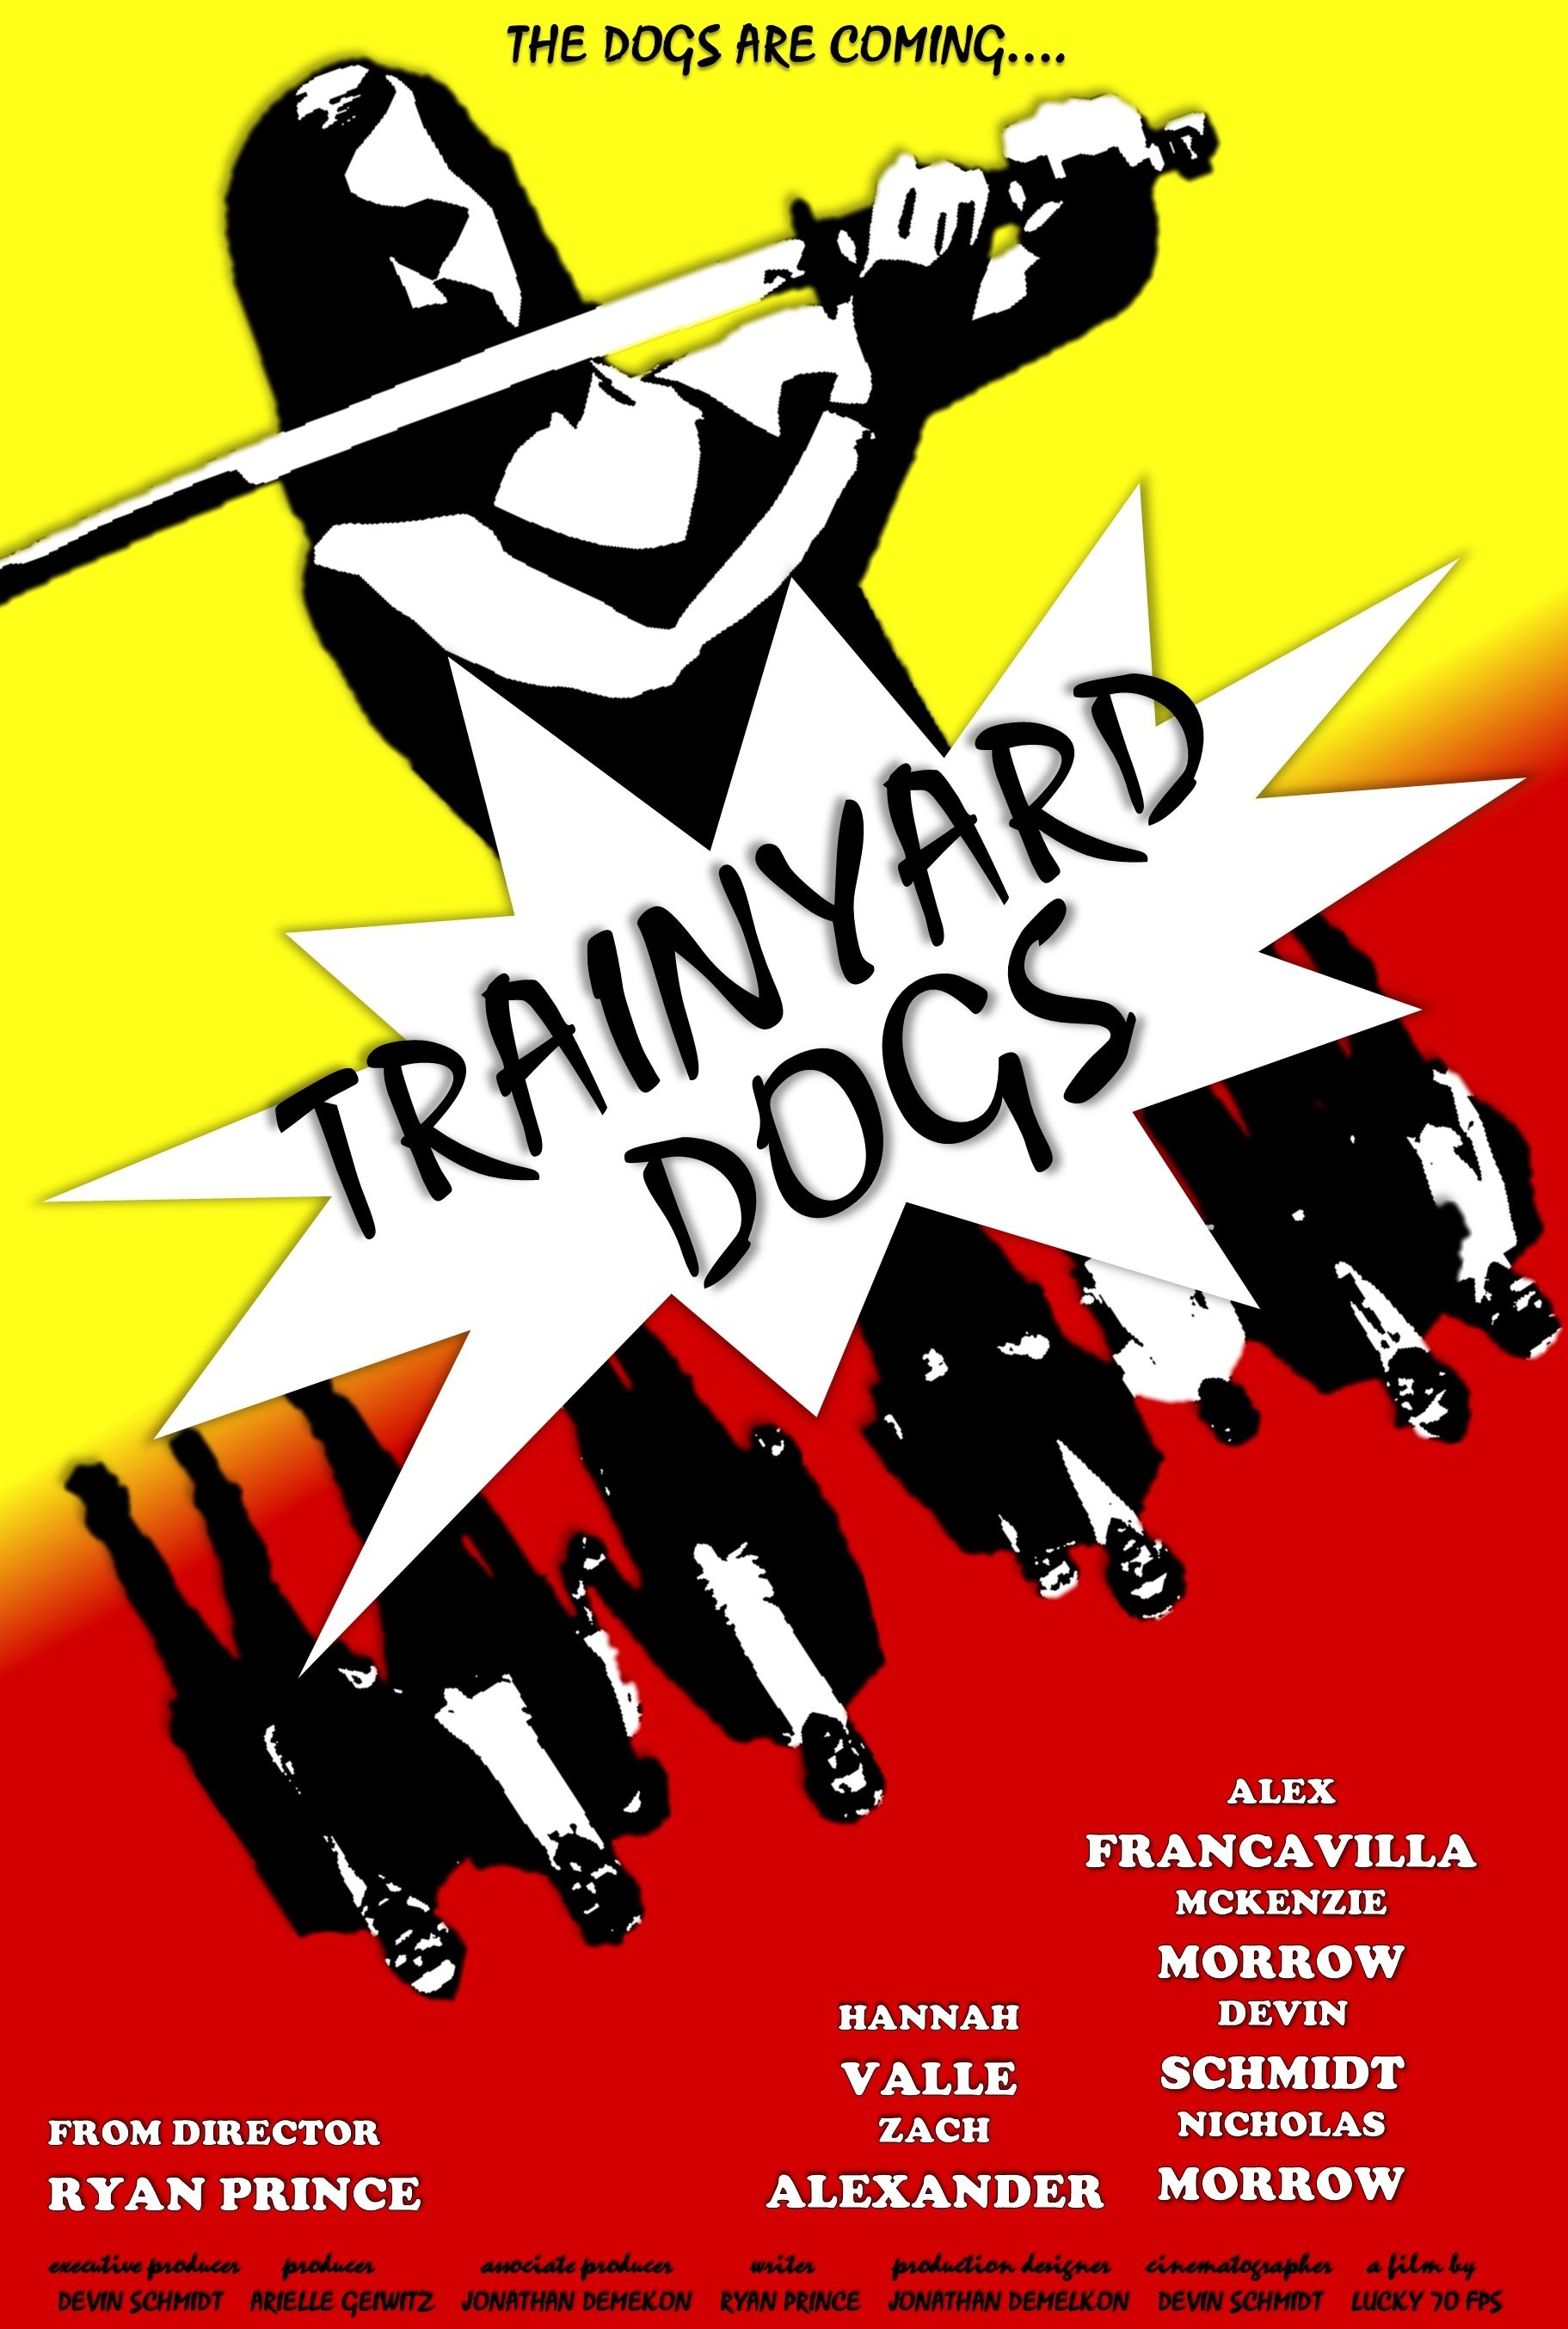 Alex Francavilla in Trainyard Dogs (2016)